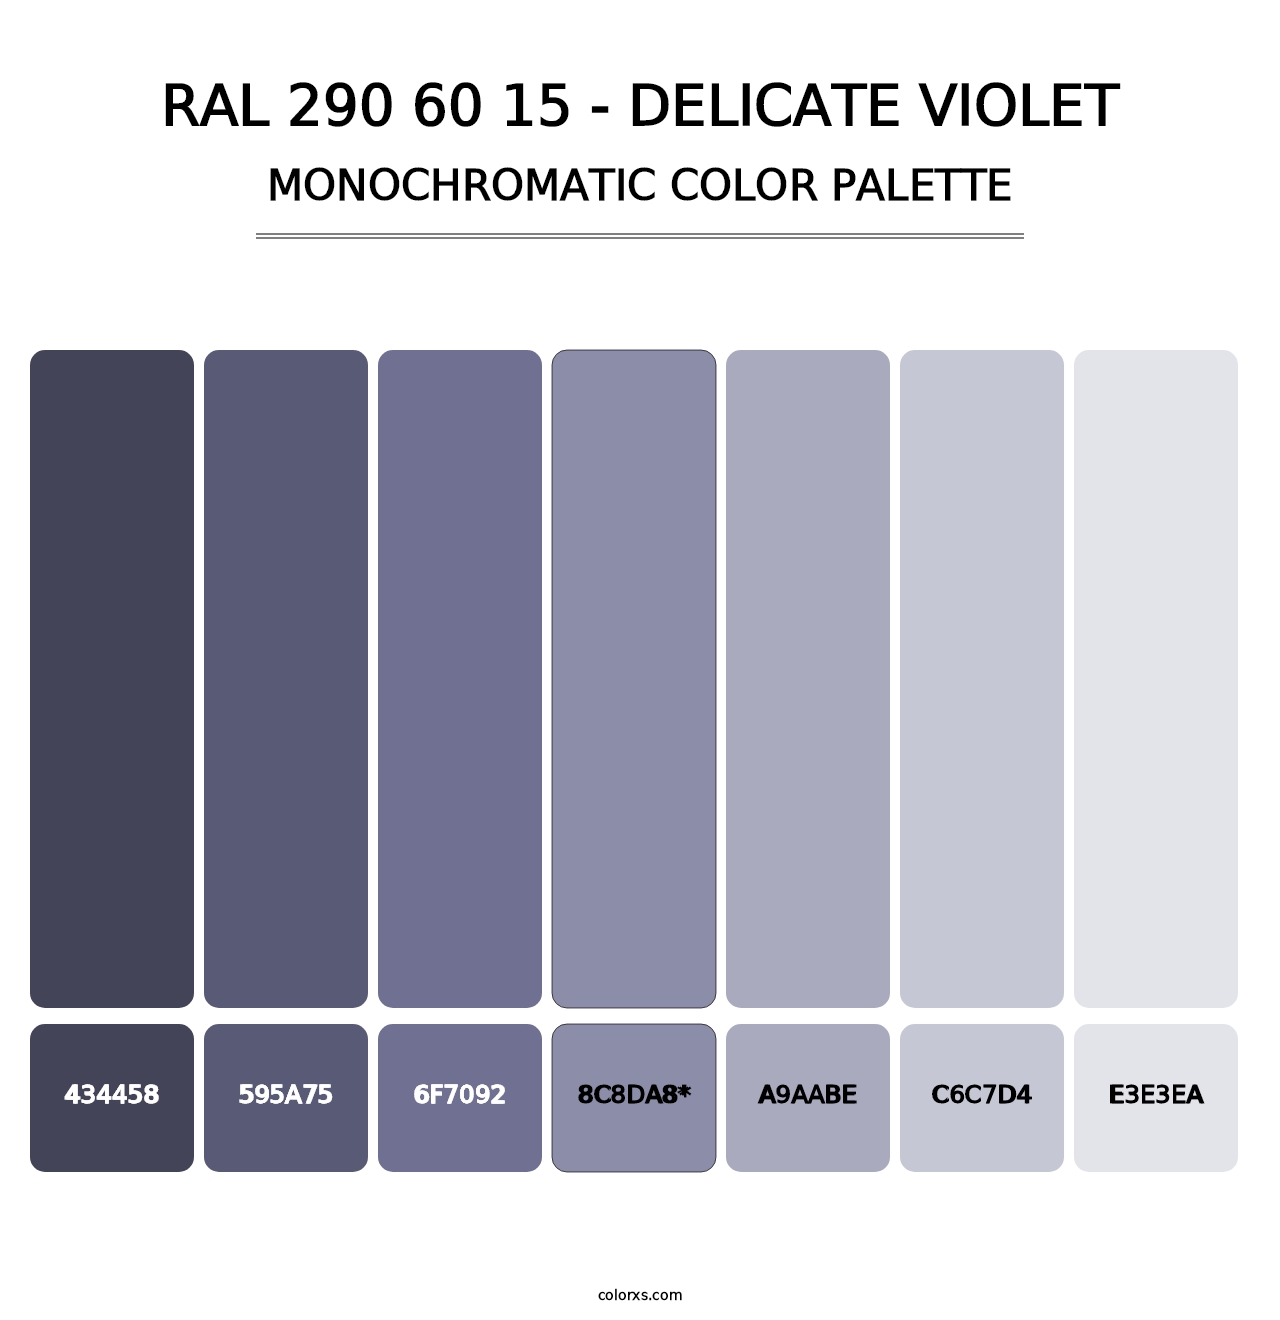 RAL 290 60 15 - Delicate Violet - Monochromatic Color Palette